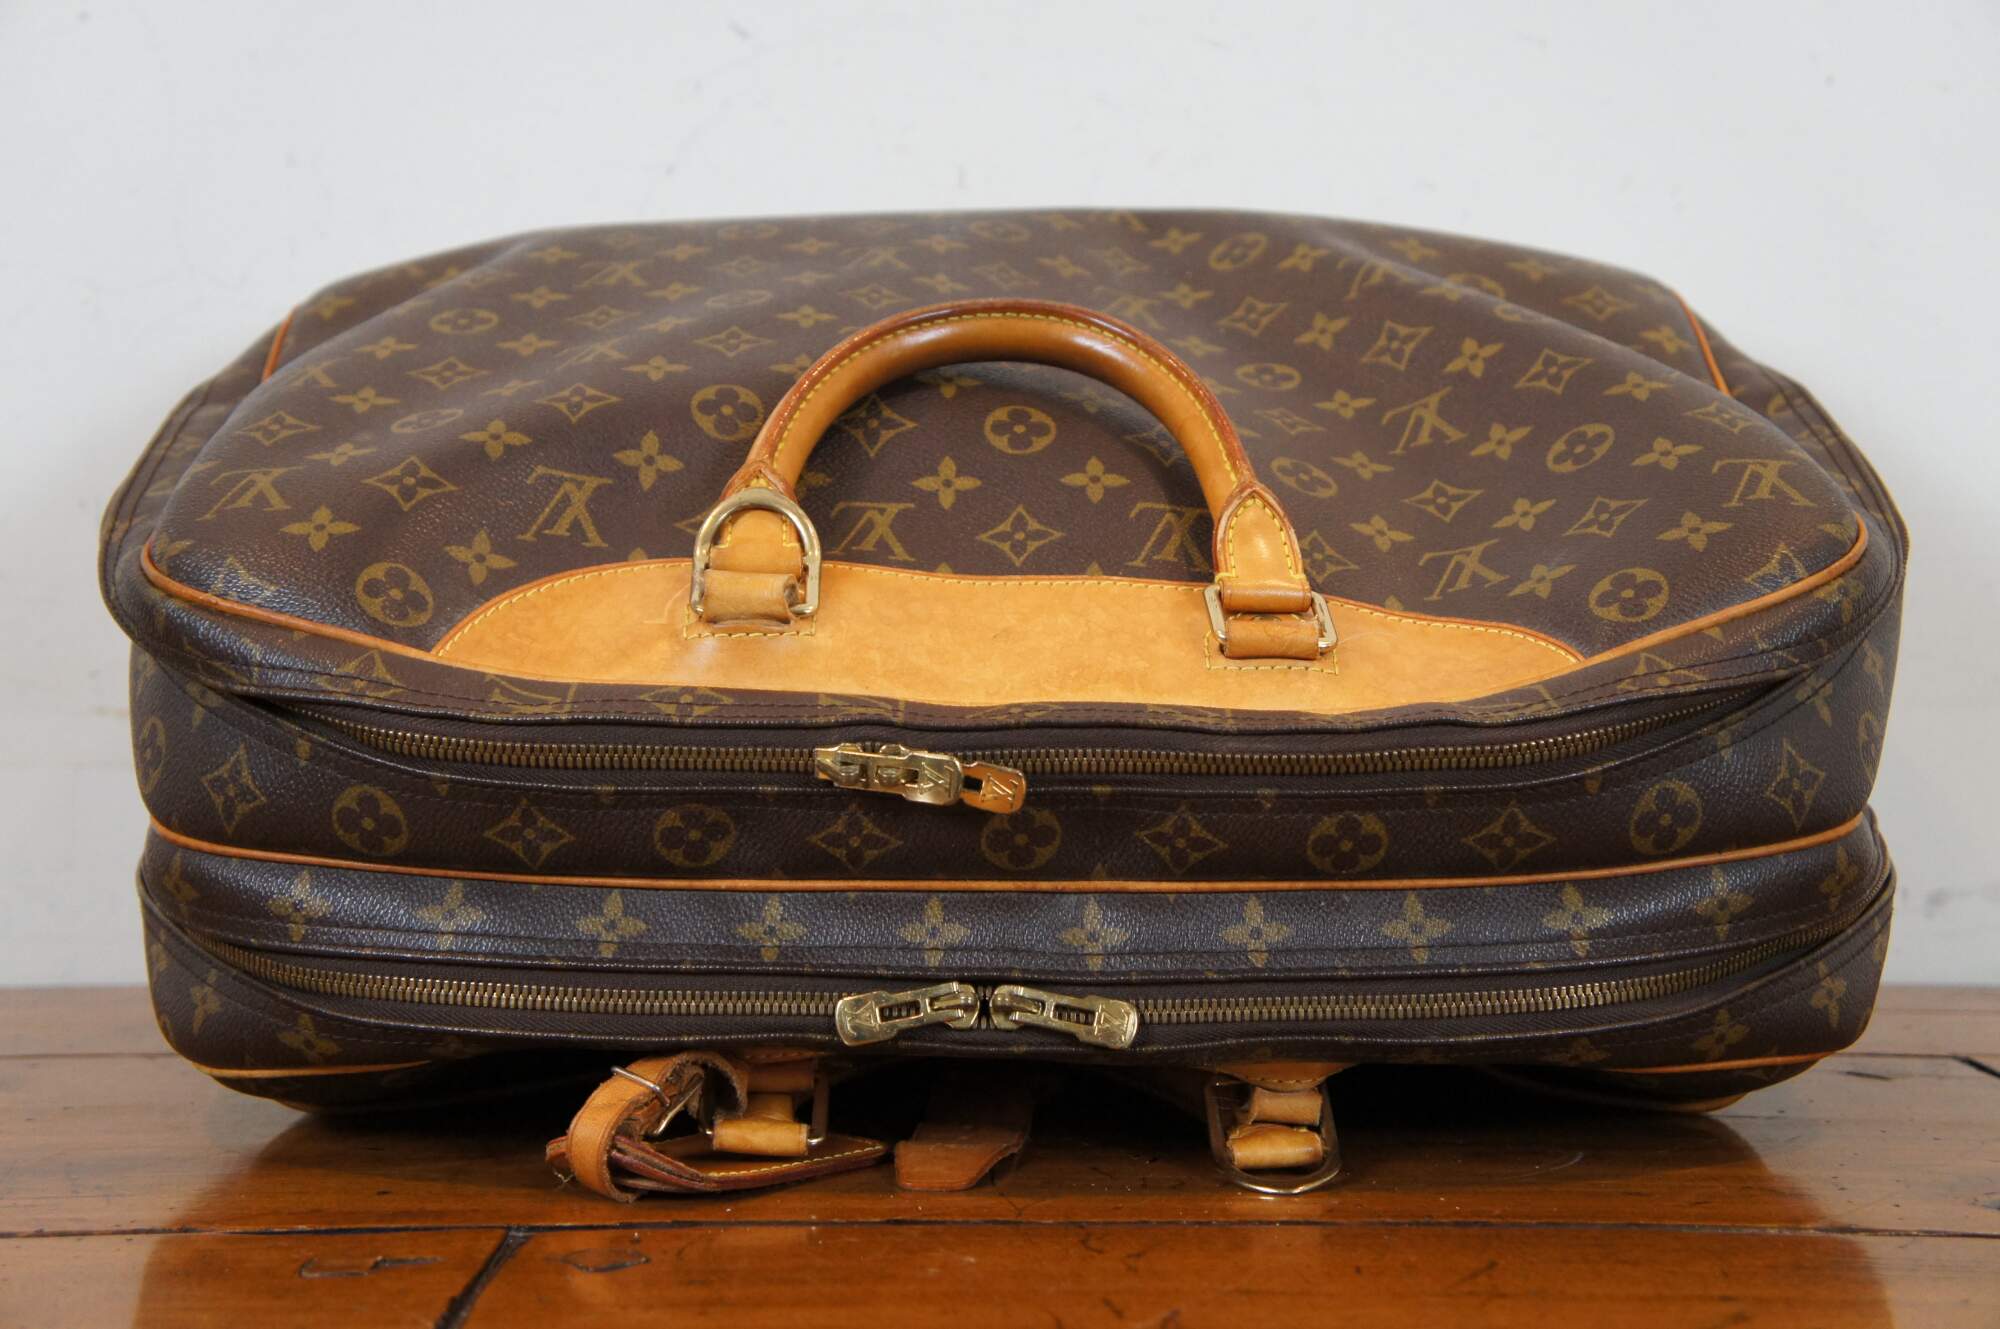 Louis Vuitton Alize 2Way Luggage Bag - Louis Vuitton